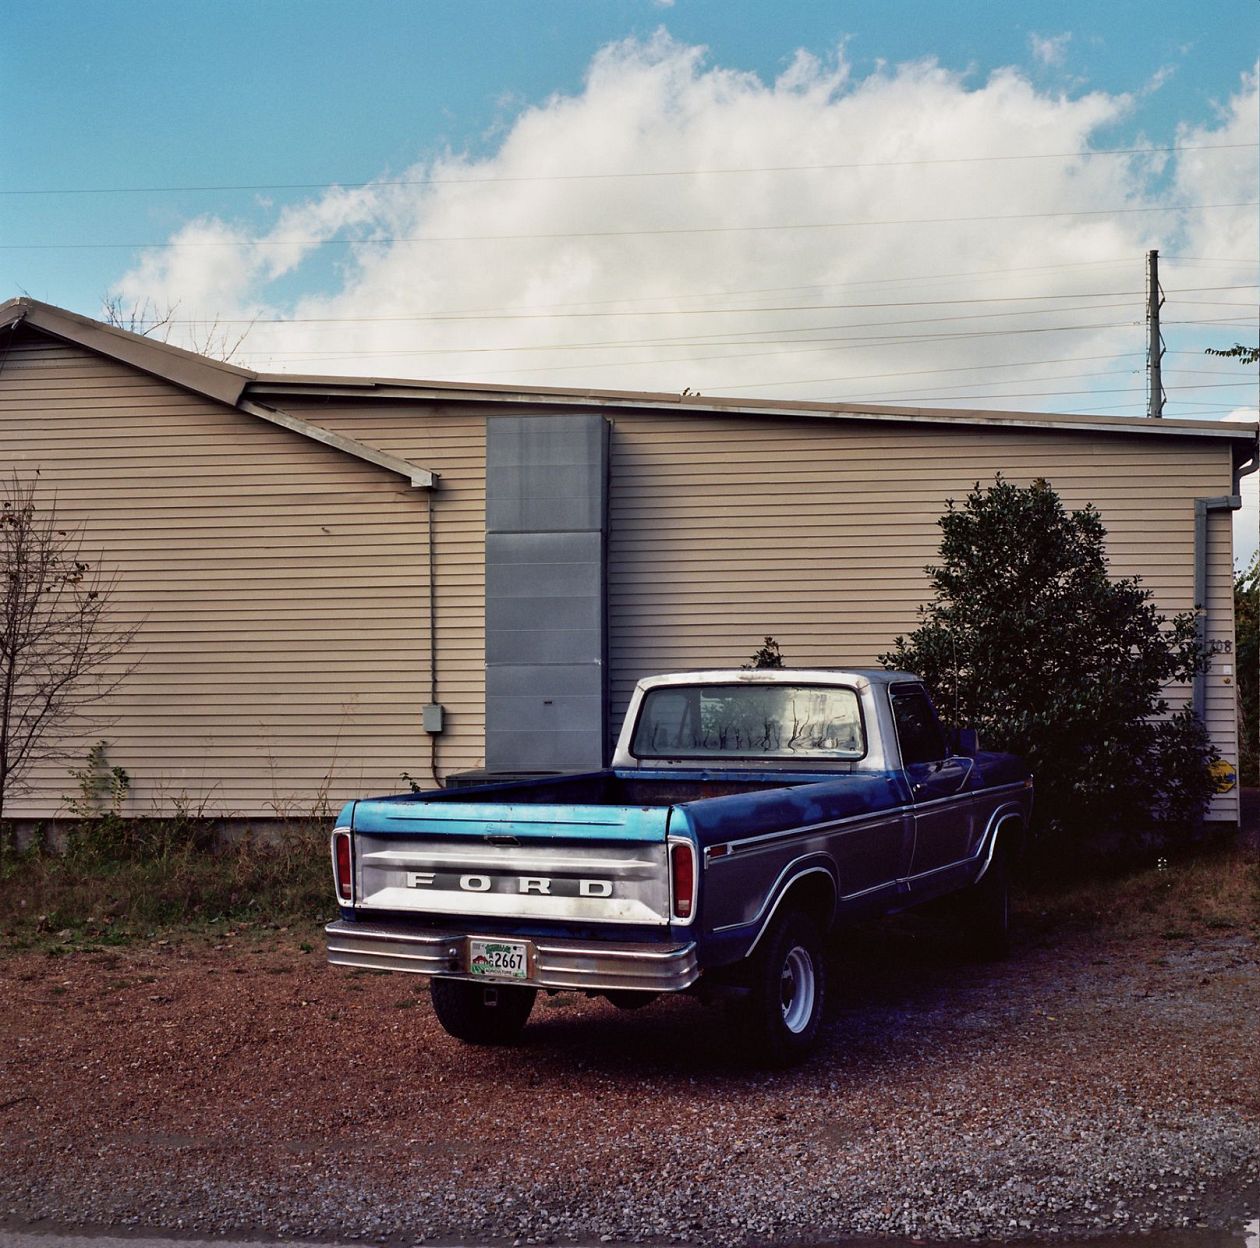 Vintage american pickup truck parked in front of a garage. Nashville